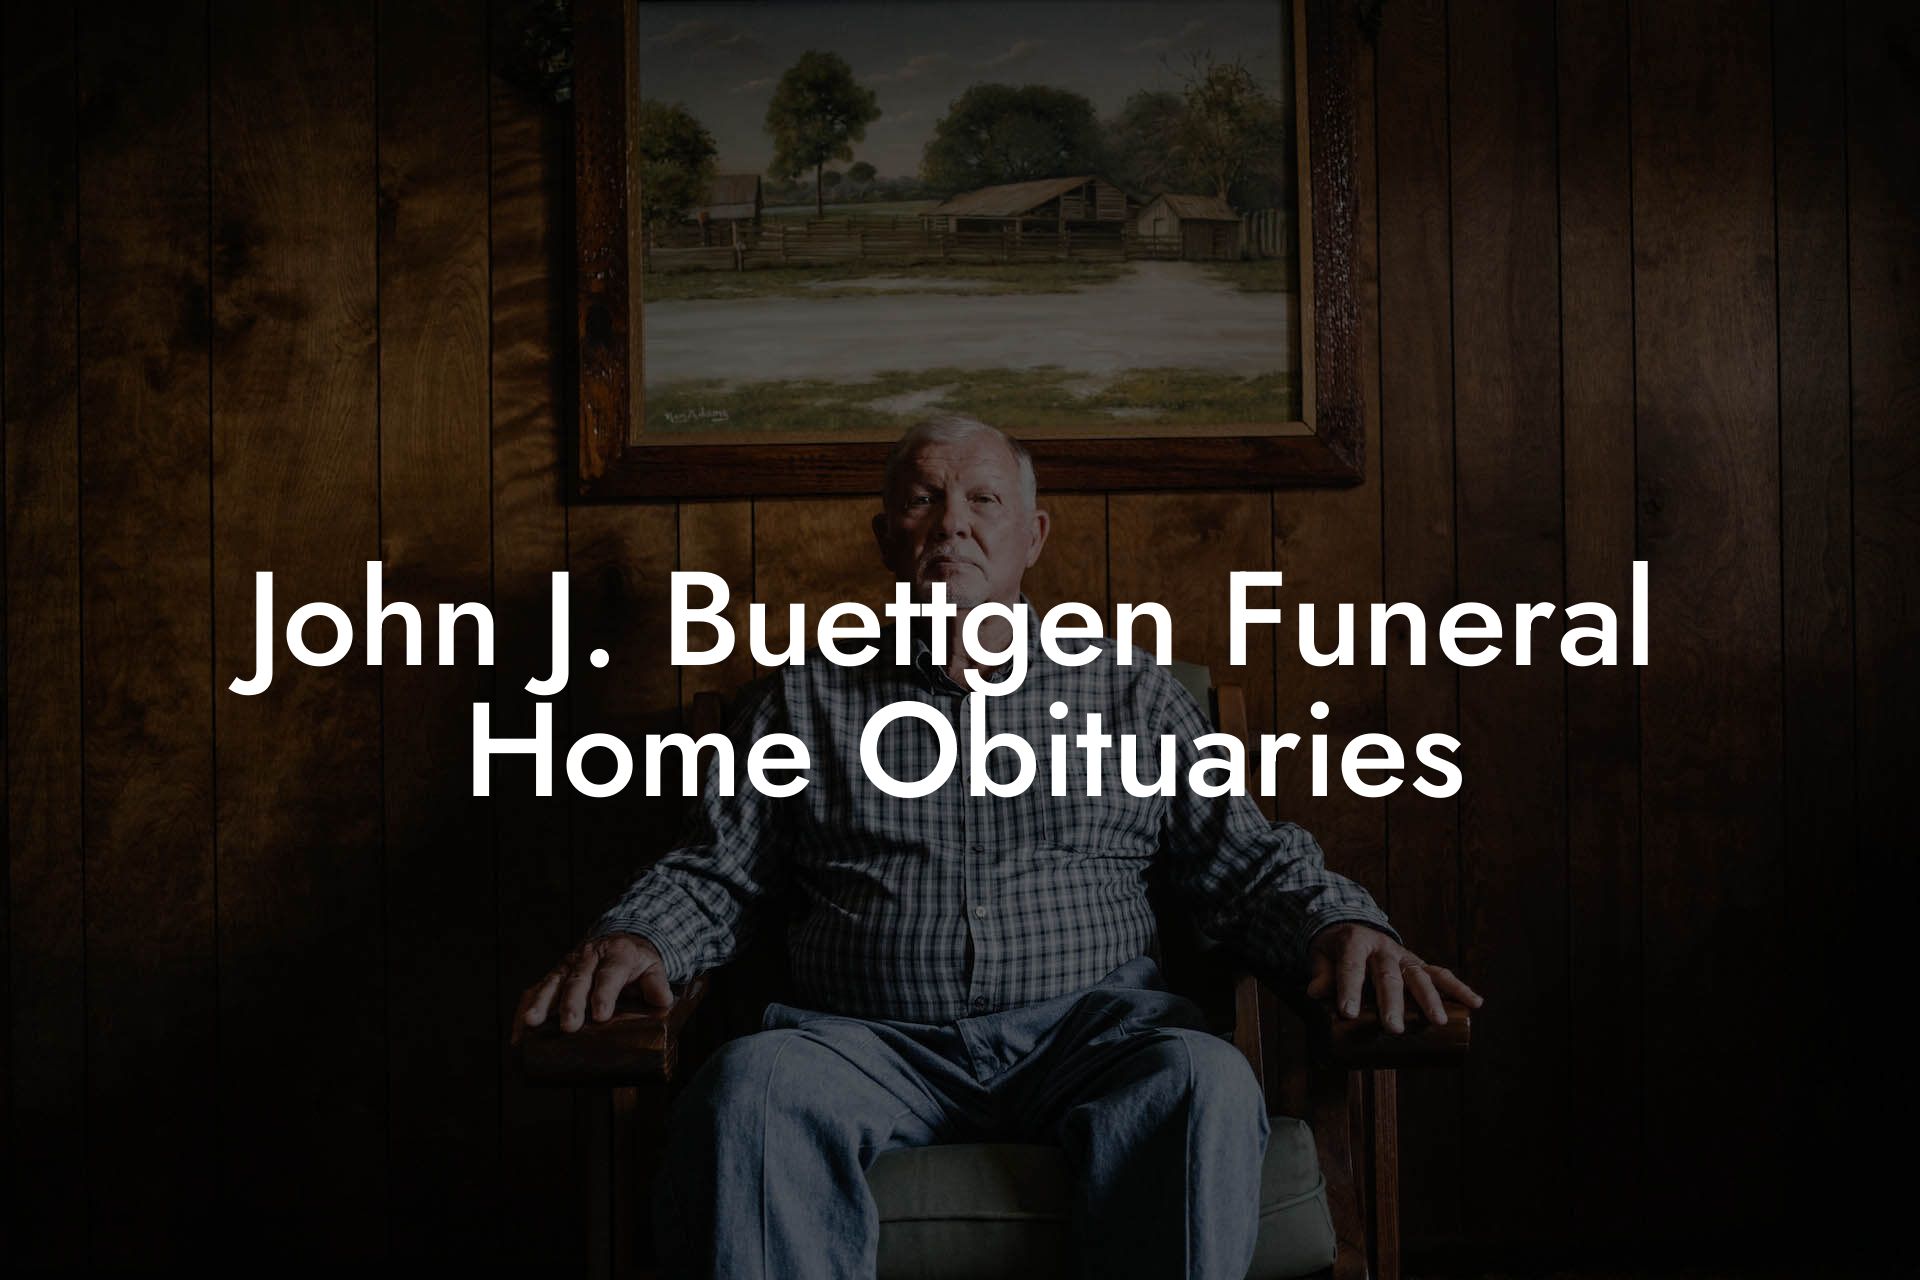 John J. Buettgen Funeral Home Obituaries